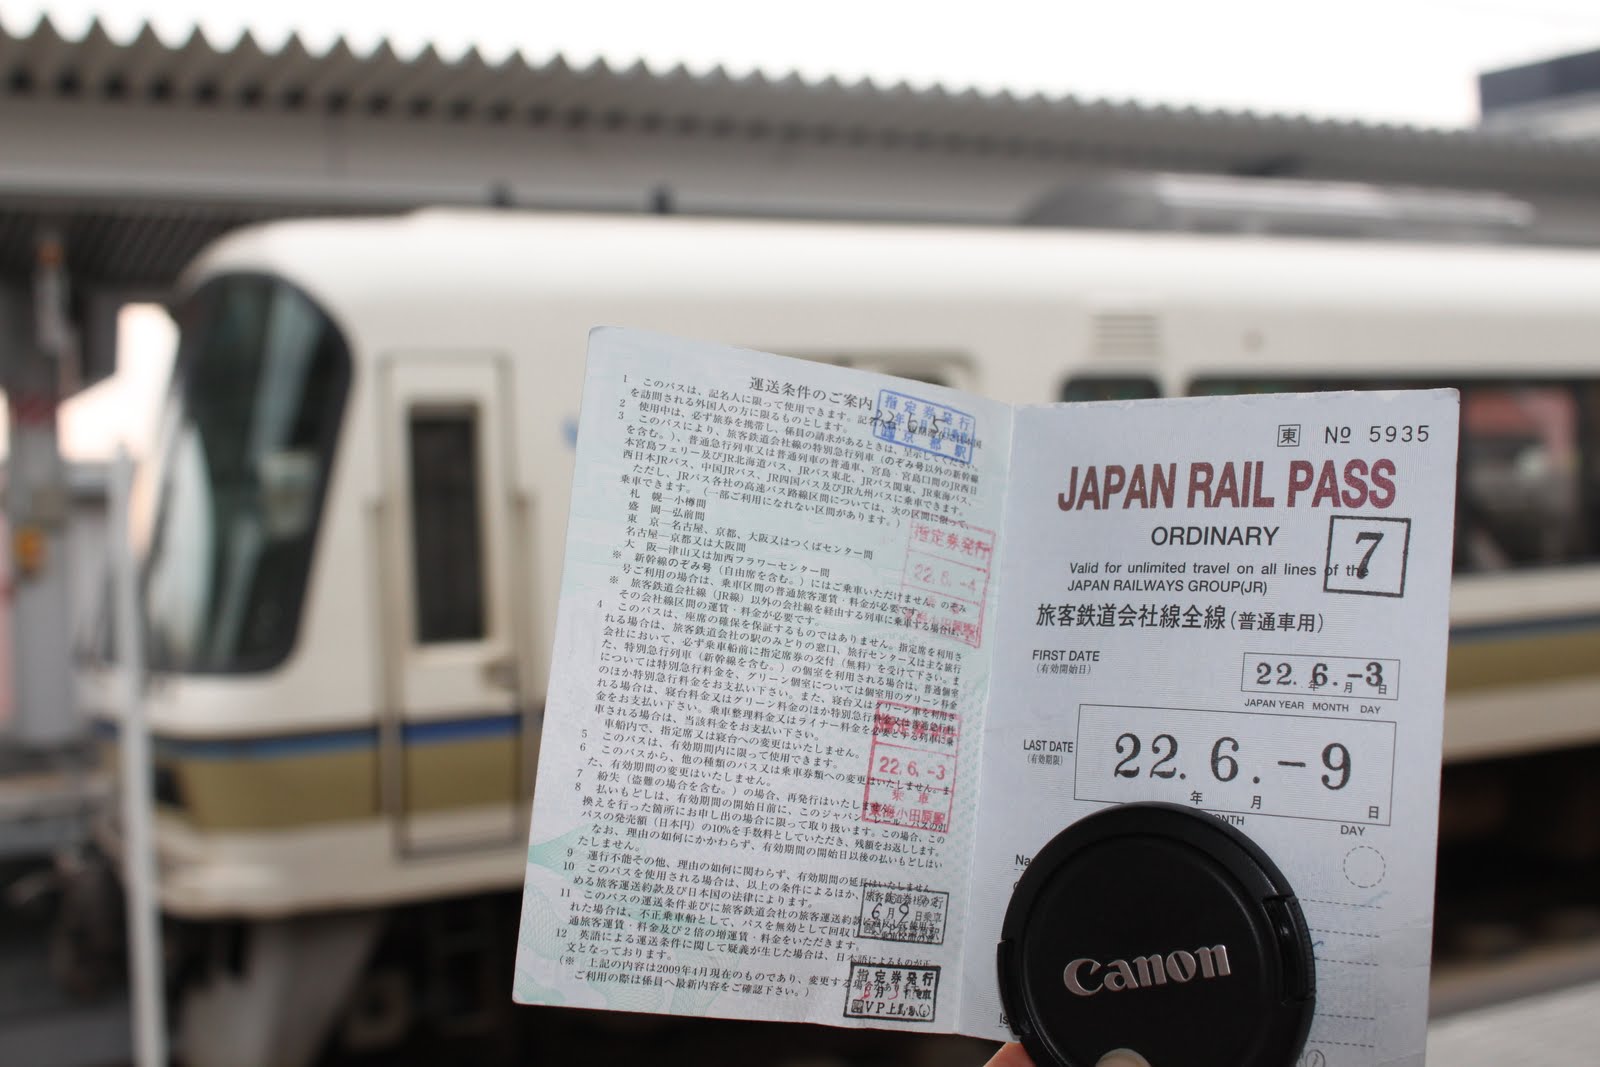 Asia Travel Stories Japan Rail Pass